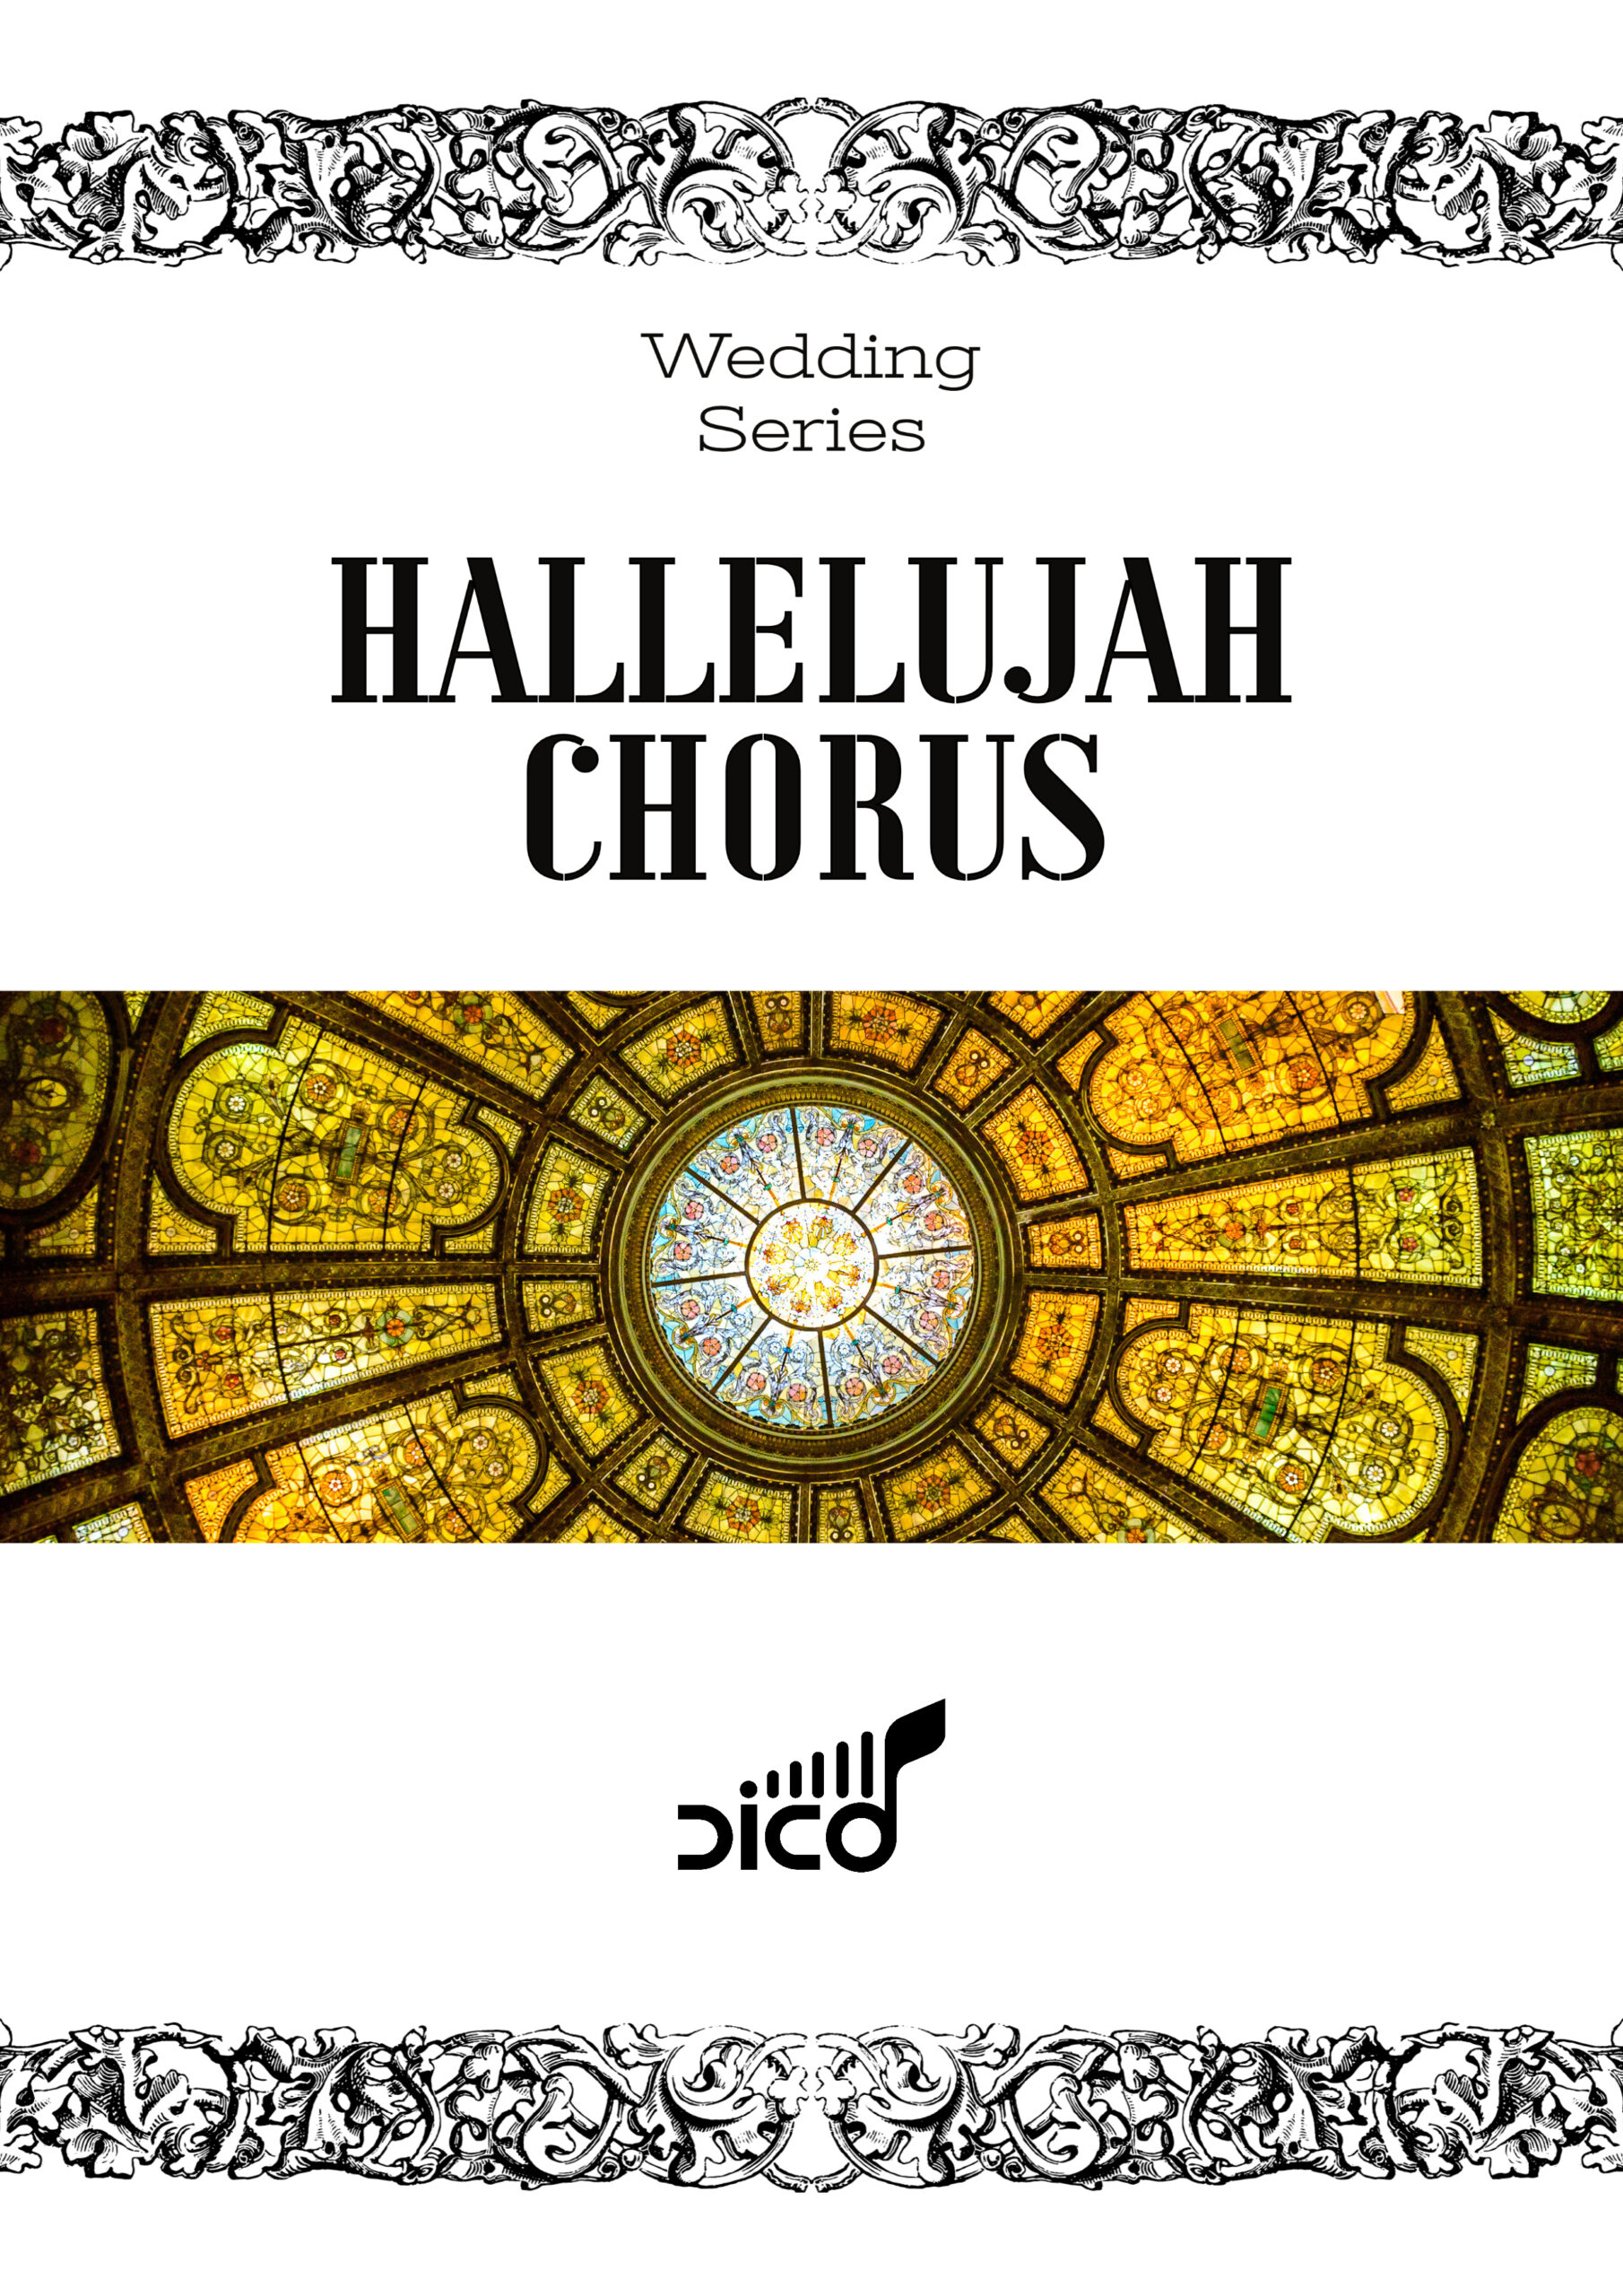 Hallelujah Chorus web cover scaled